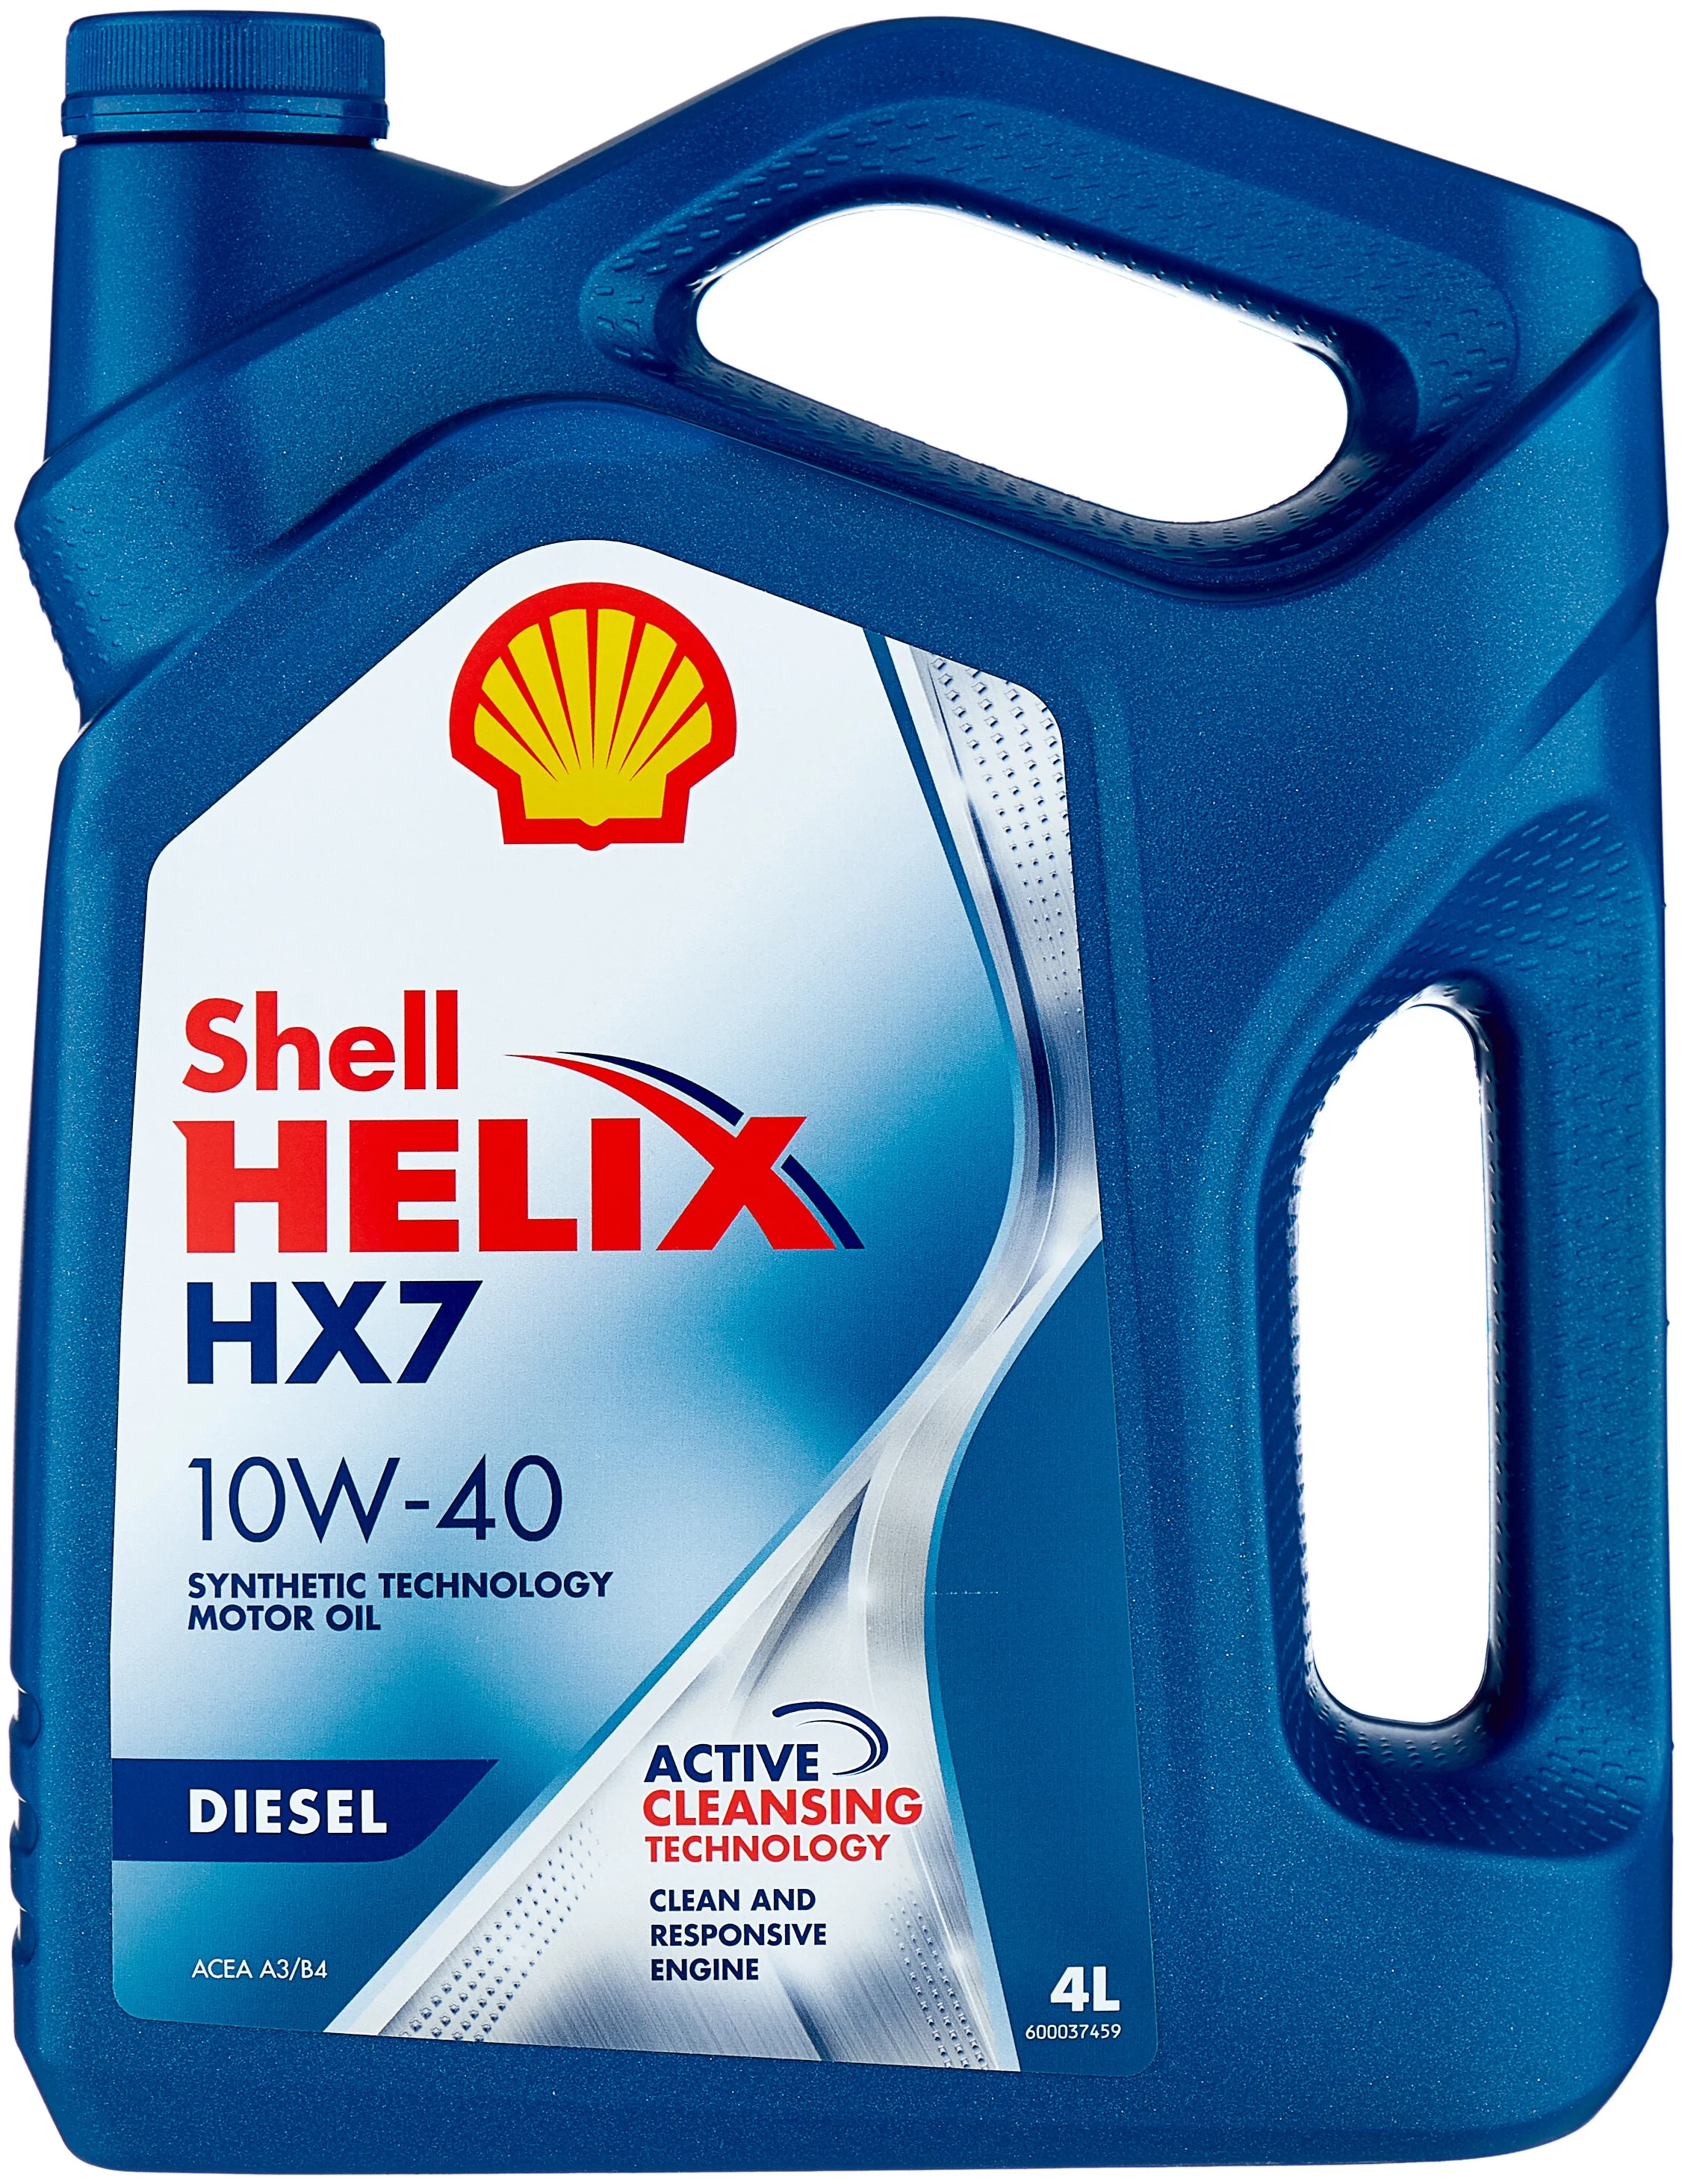 SHELL Helix HX7 Diesel 10W-40 - для турбированных двигателей